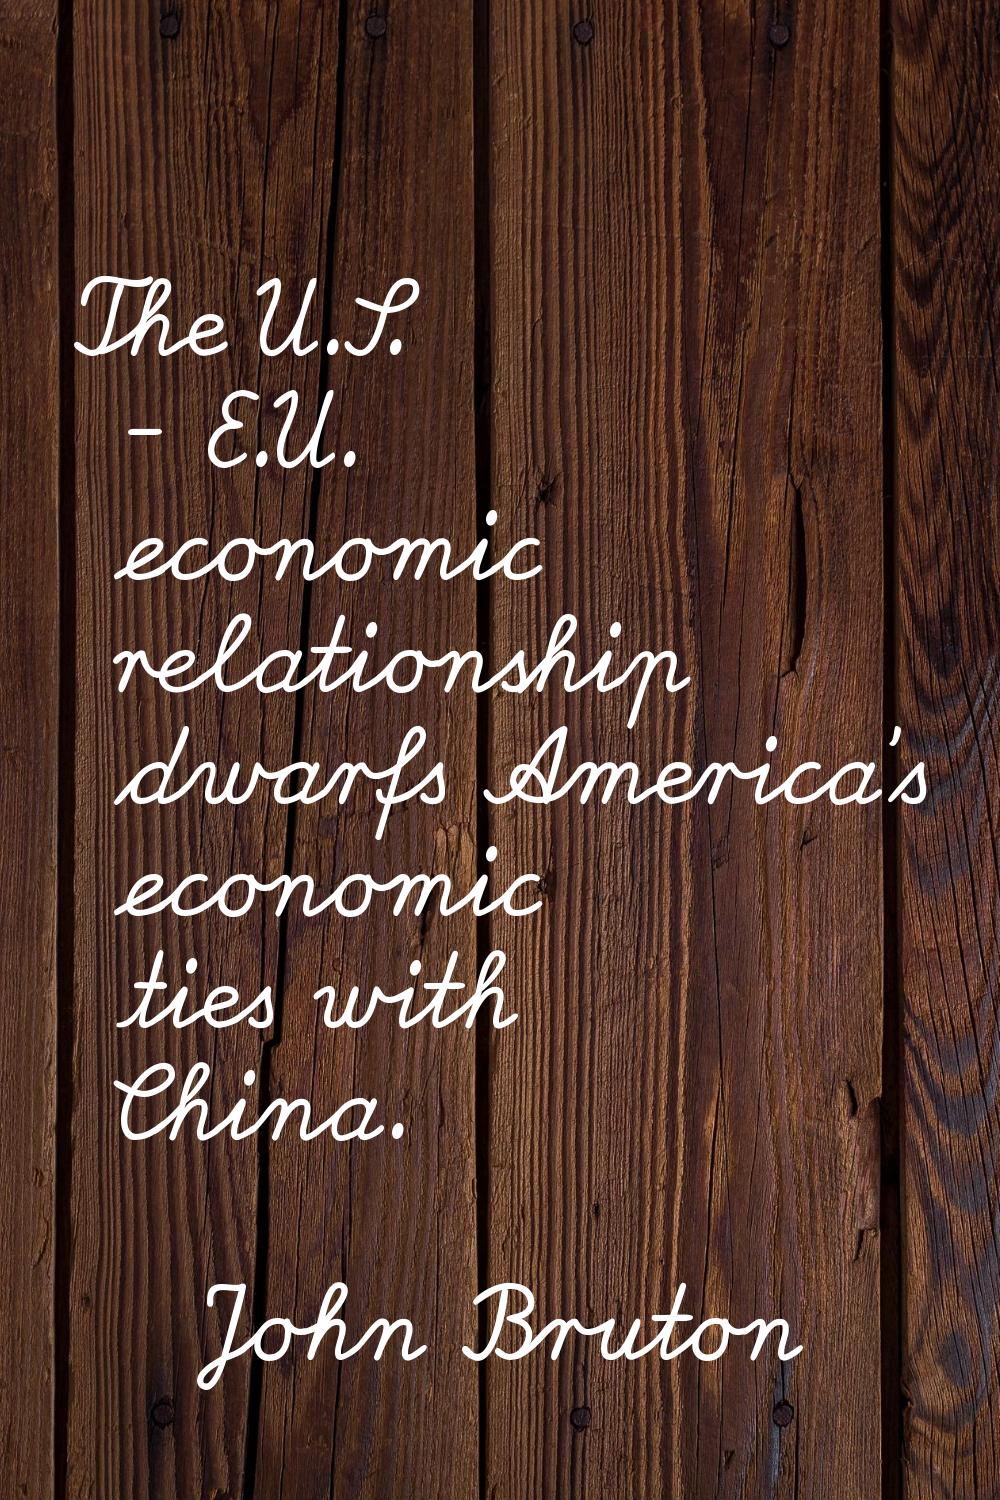 The U.S. - E.U. economic relationship dwarfs America's economic ties with China.